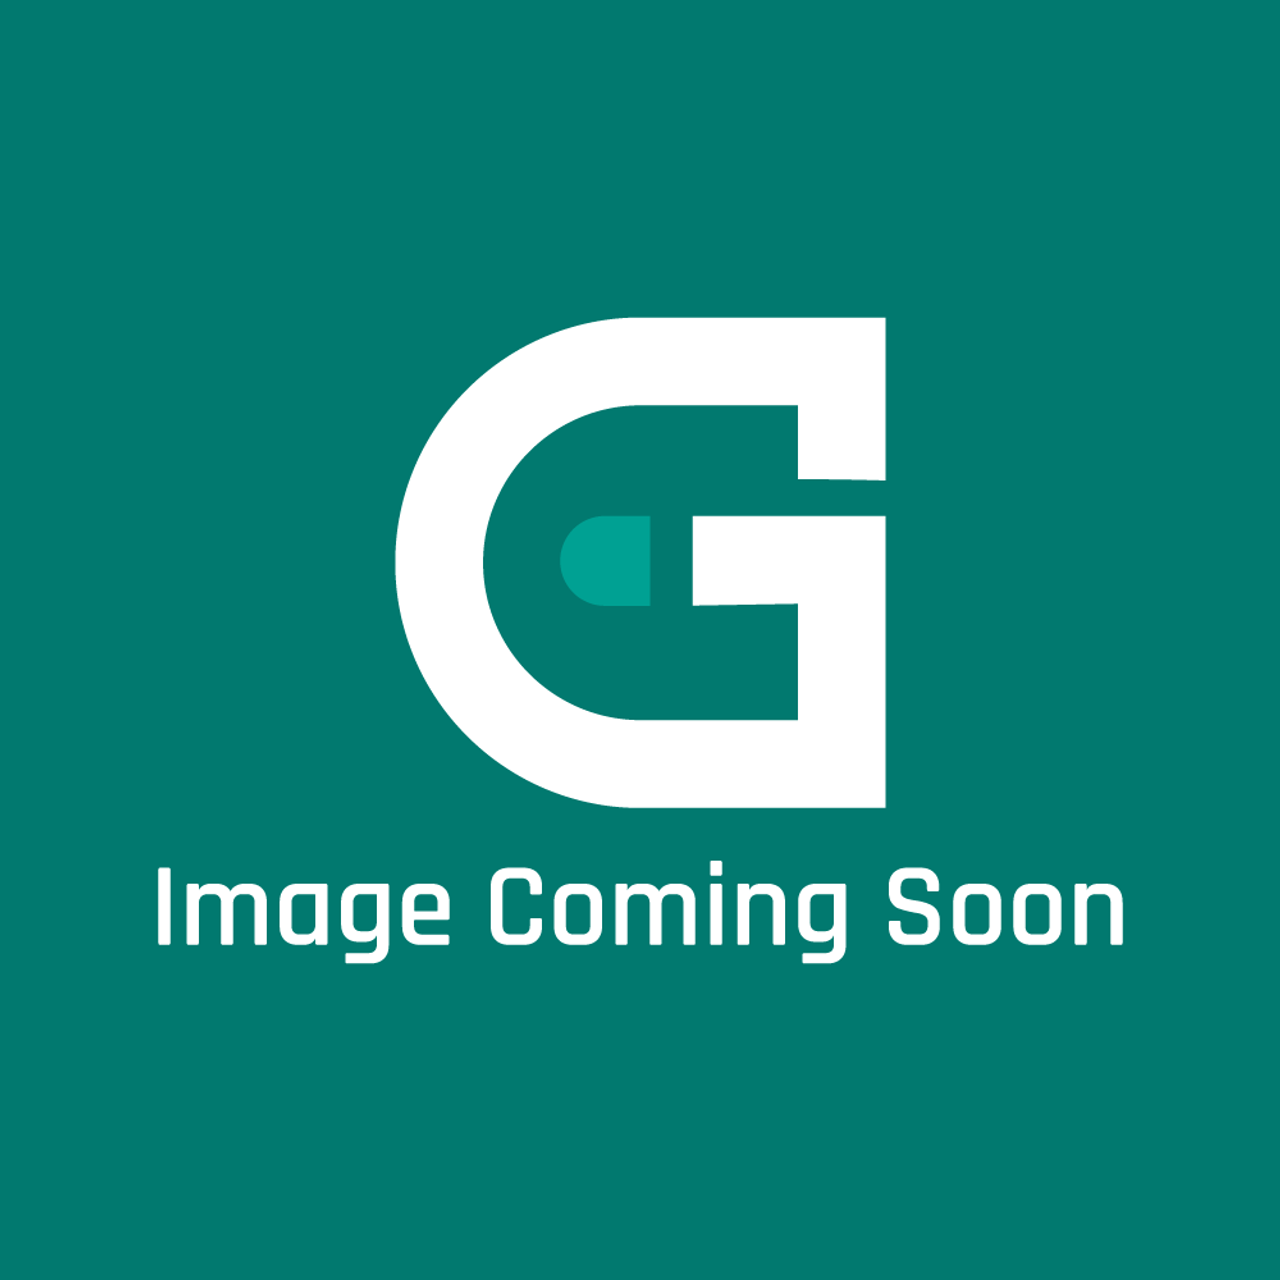 GE Appliances WB18T10426 - Relay Brd/Sensor Harness - Image Coming Soon!